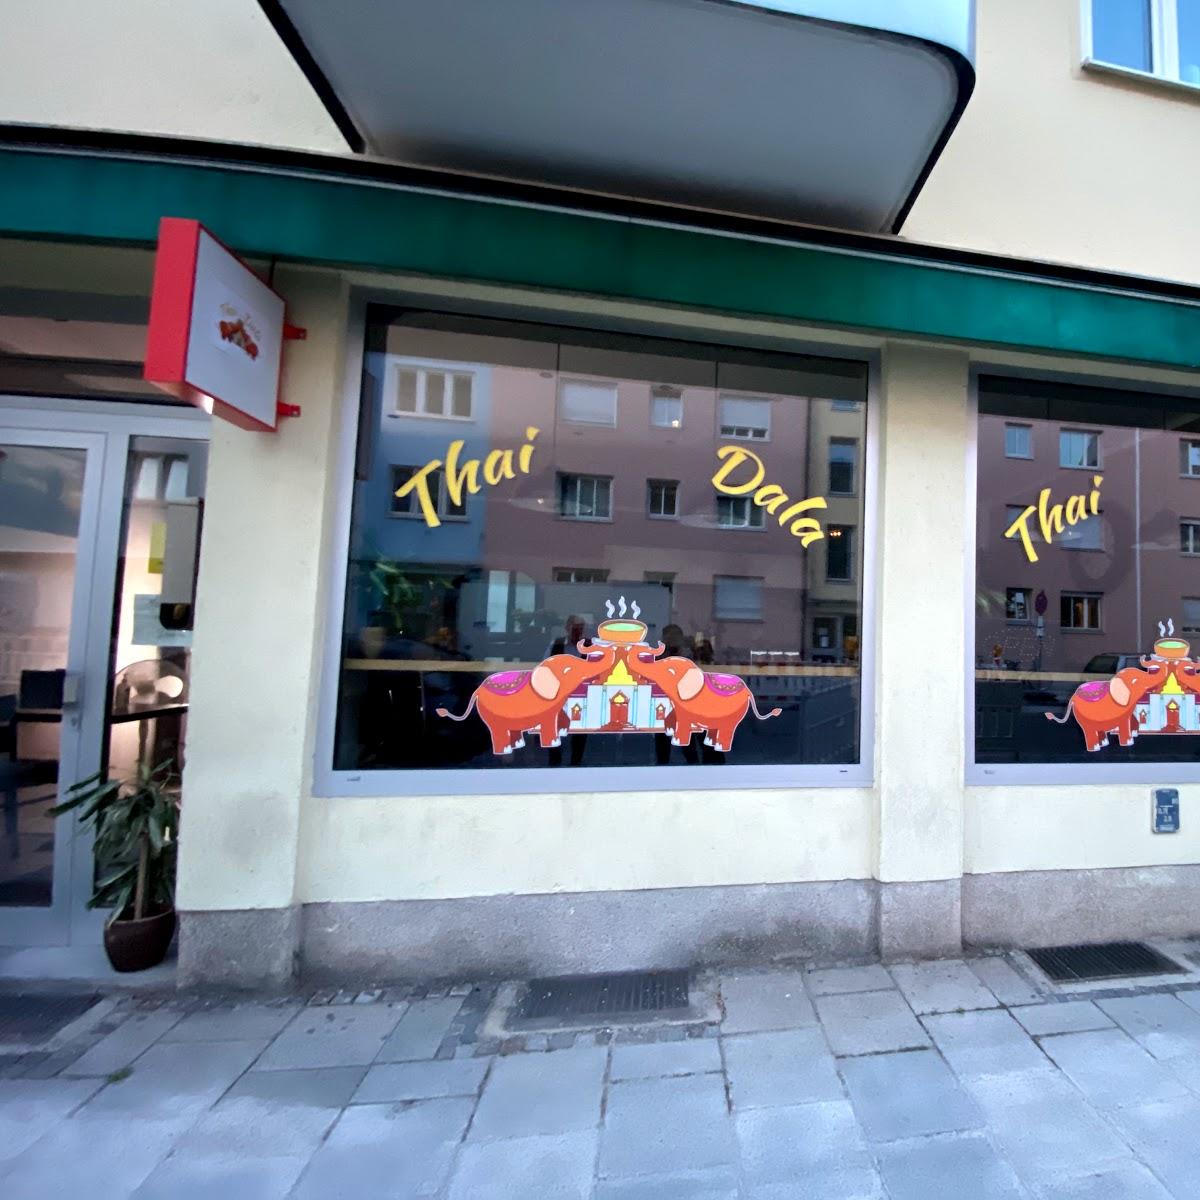 Restaurant "Thai Dala" in München